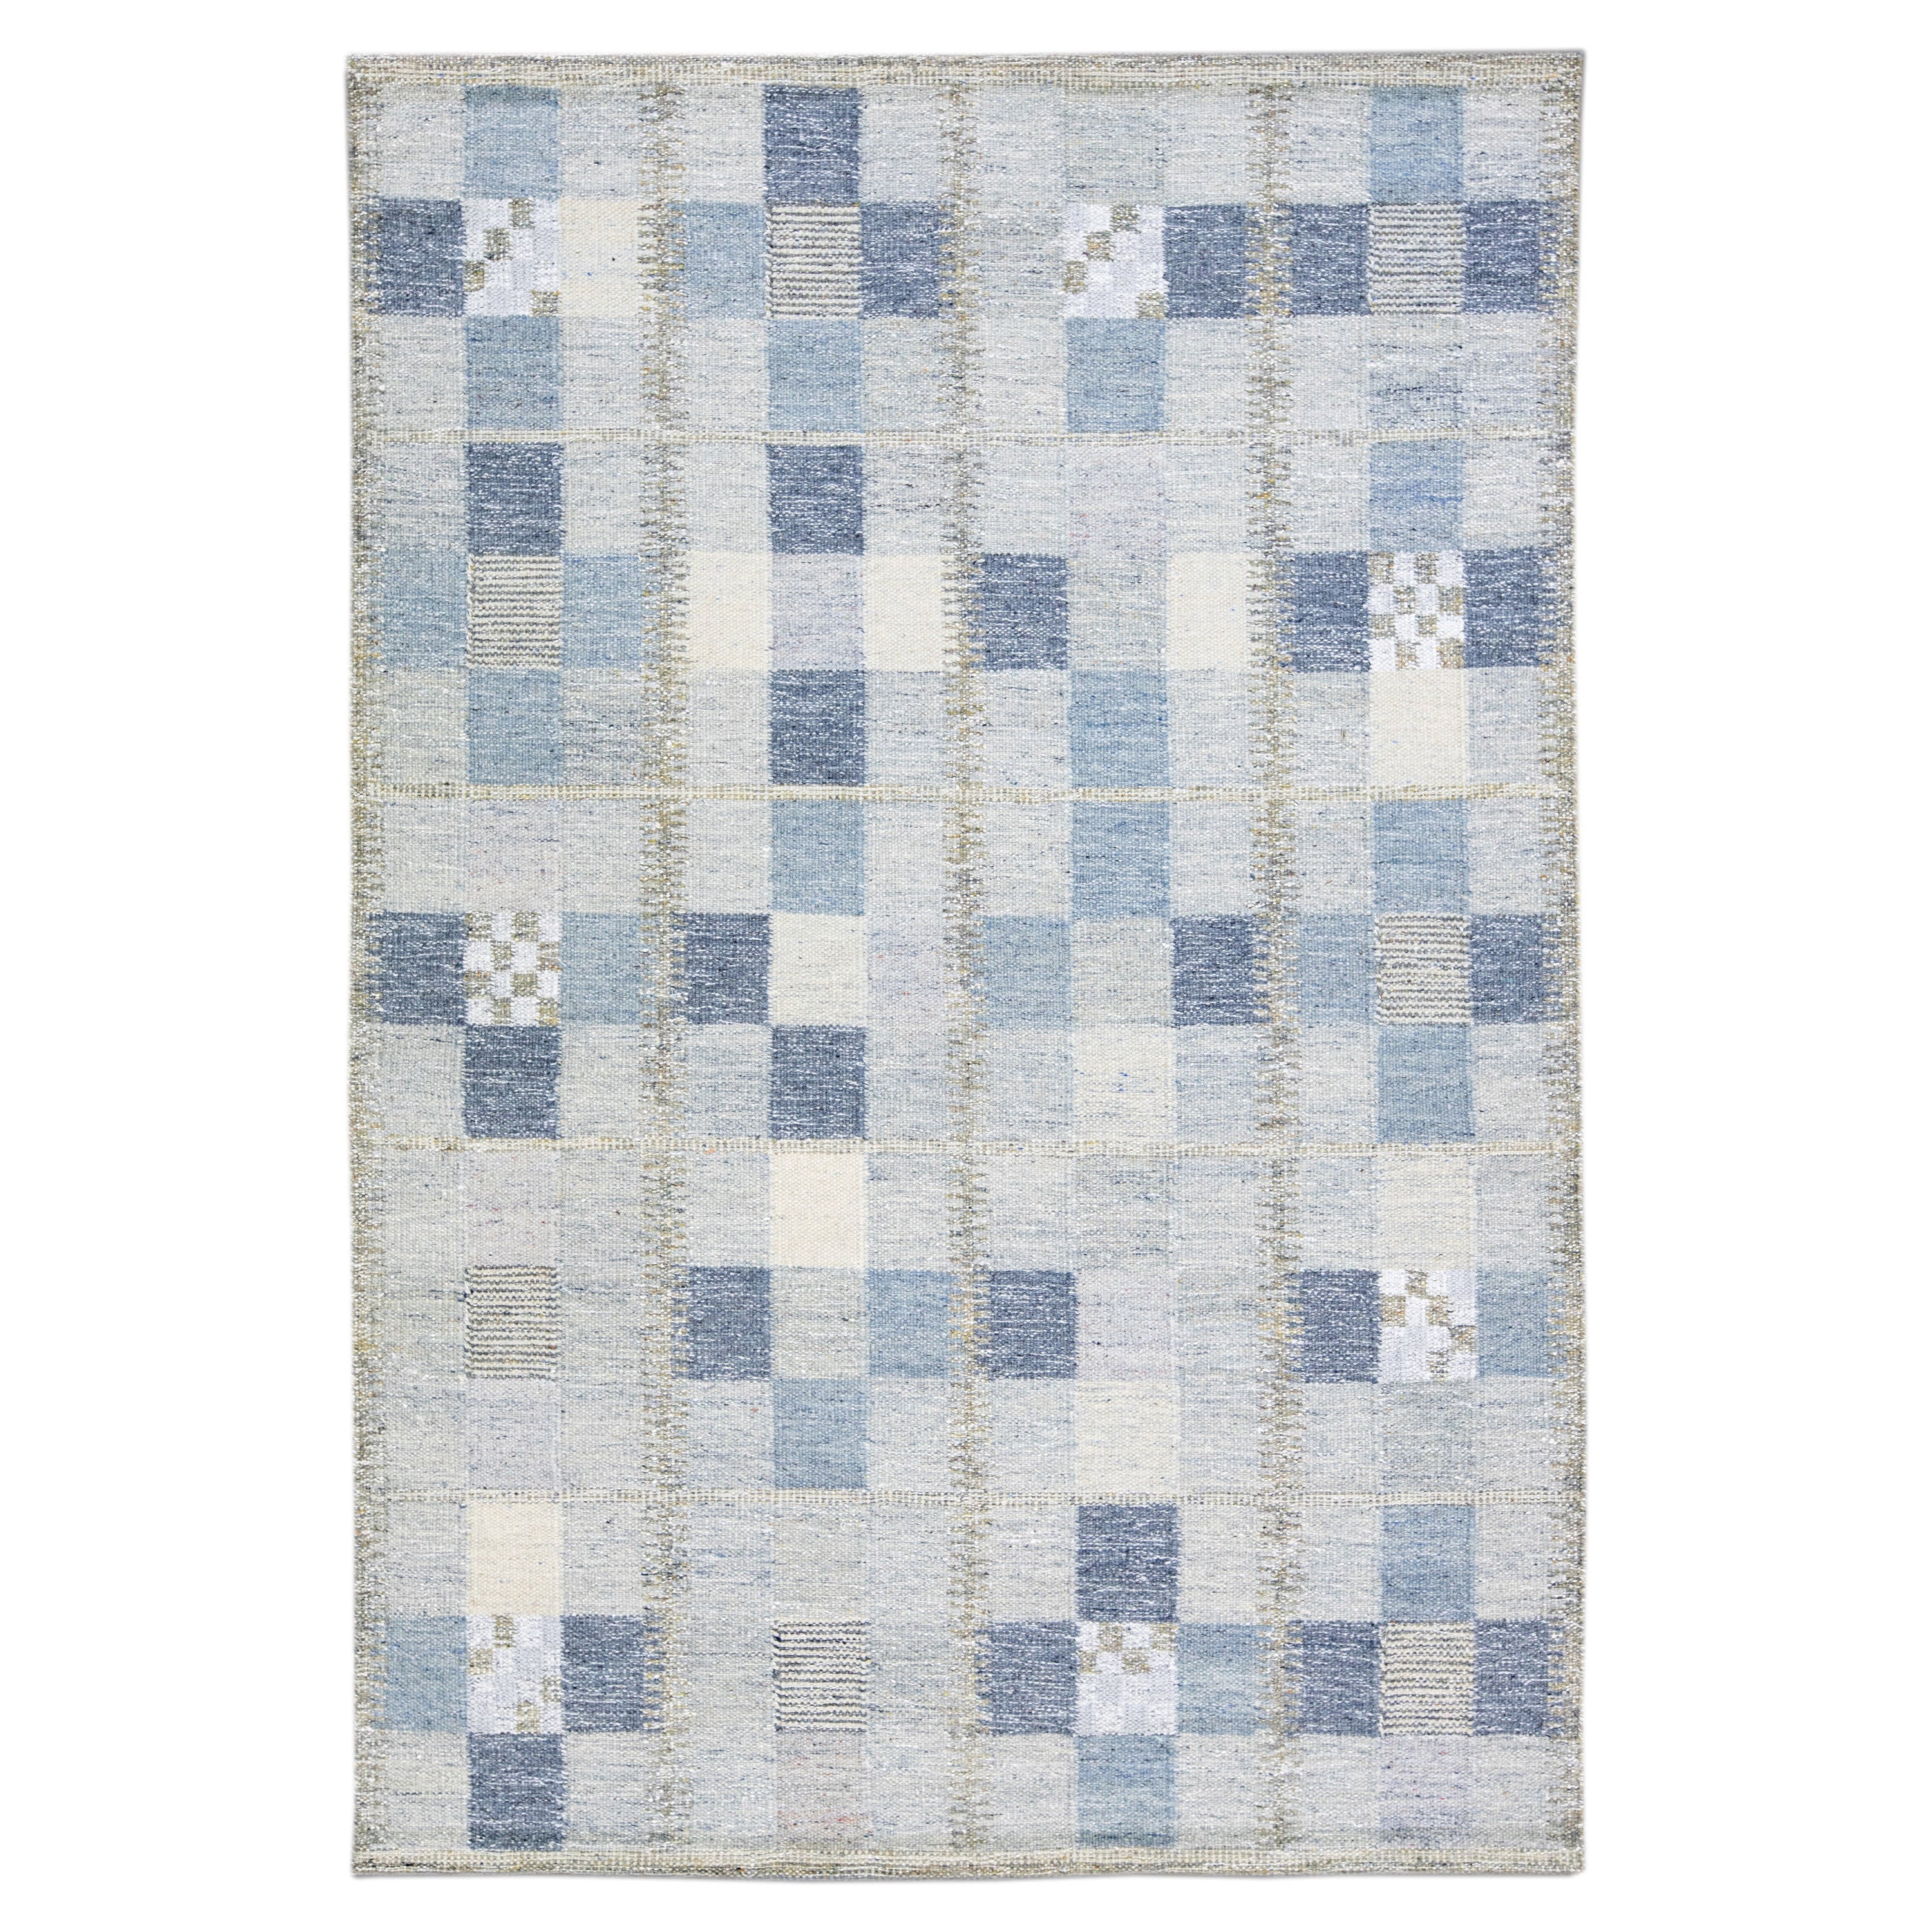 Modern Scandinavian Blue and Gray Handmade Geometric Room SizeWool Rug For Sale